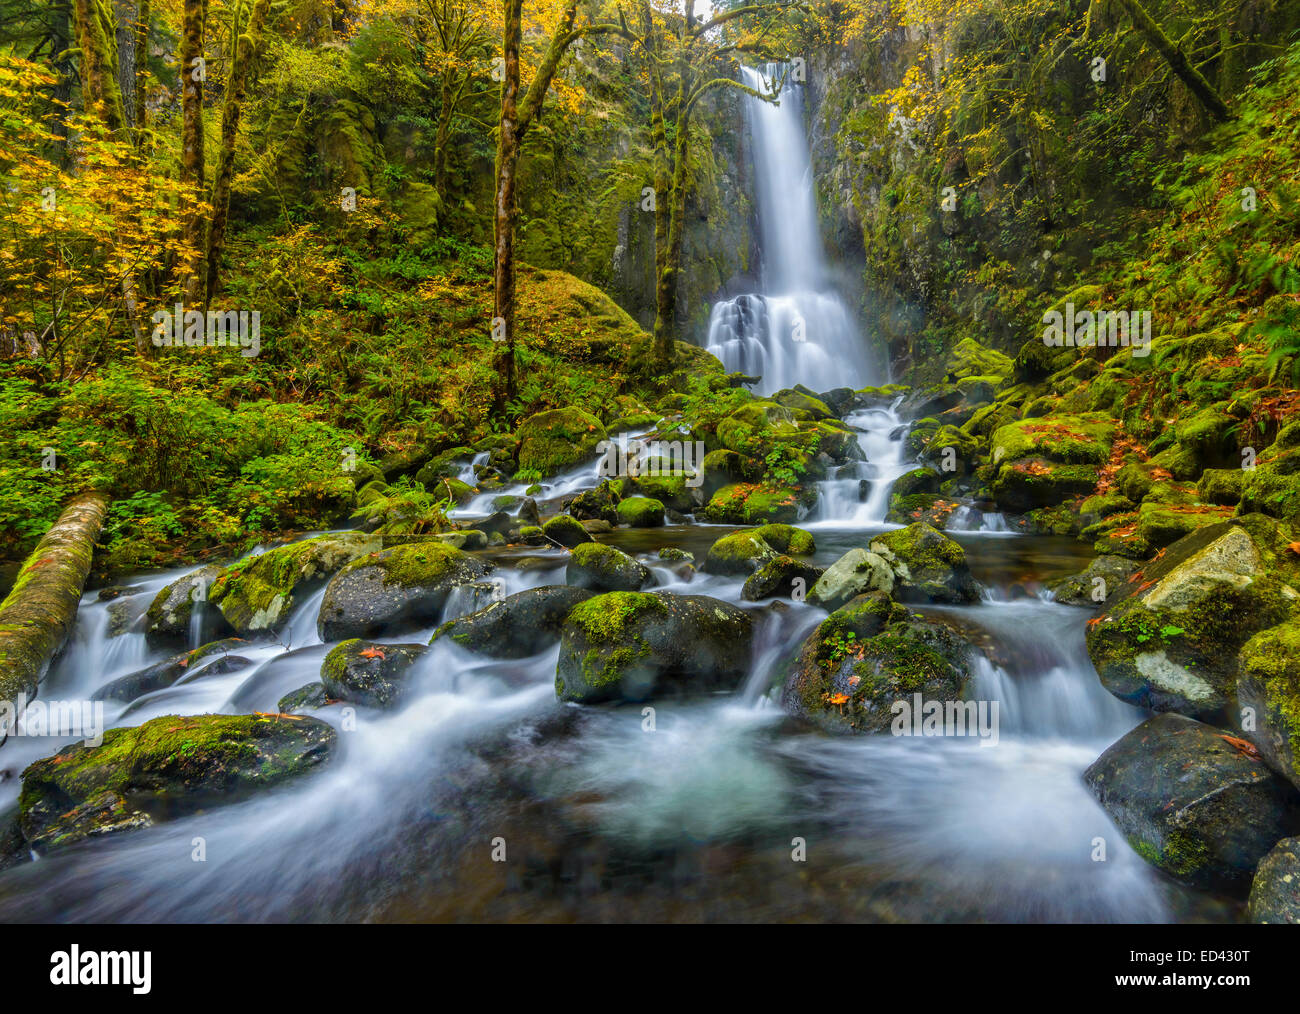 Lower Kentucky Falls; Kentucky fällt weg, Siuslaw National Forest, Oregon Coast Range Mountains. Stockfoto